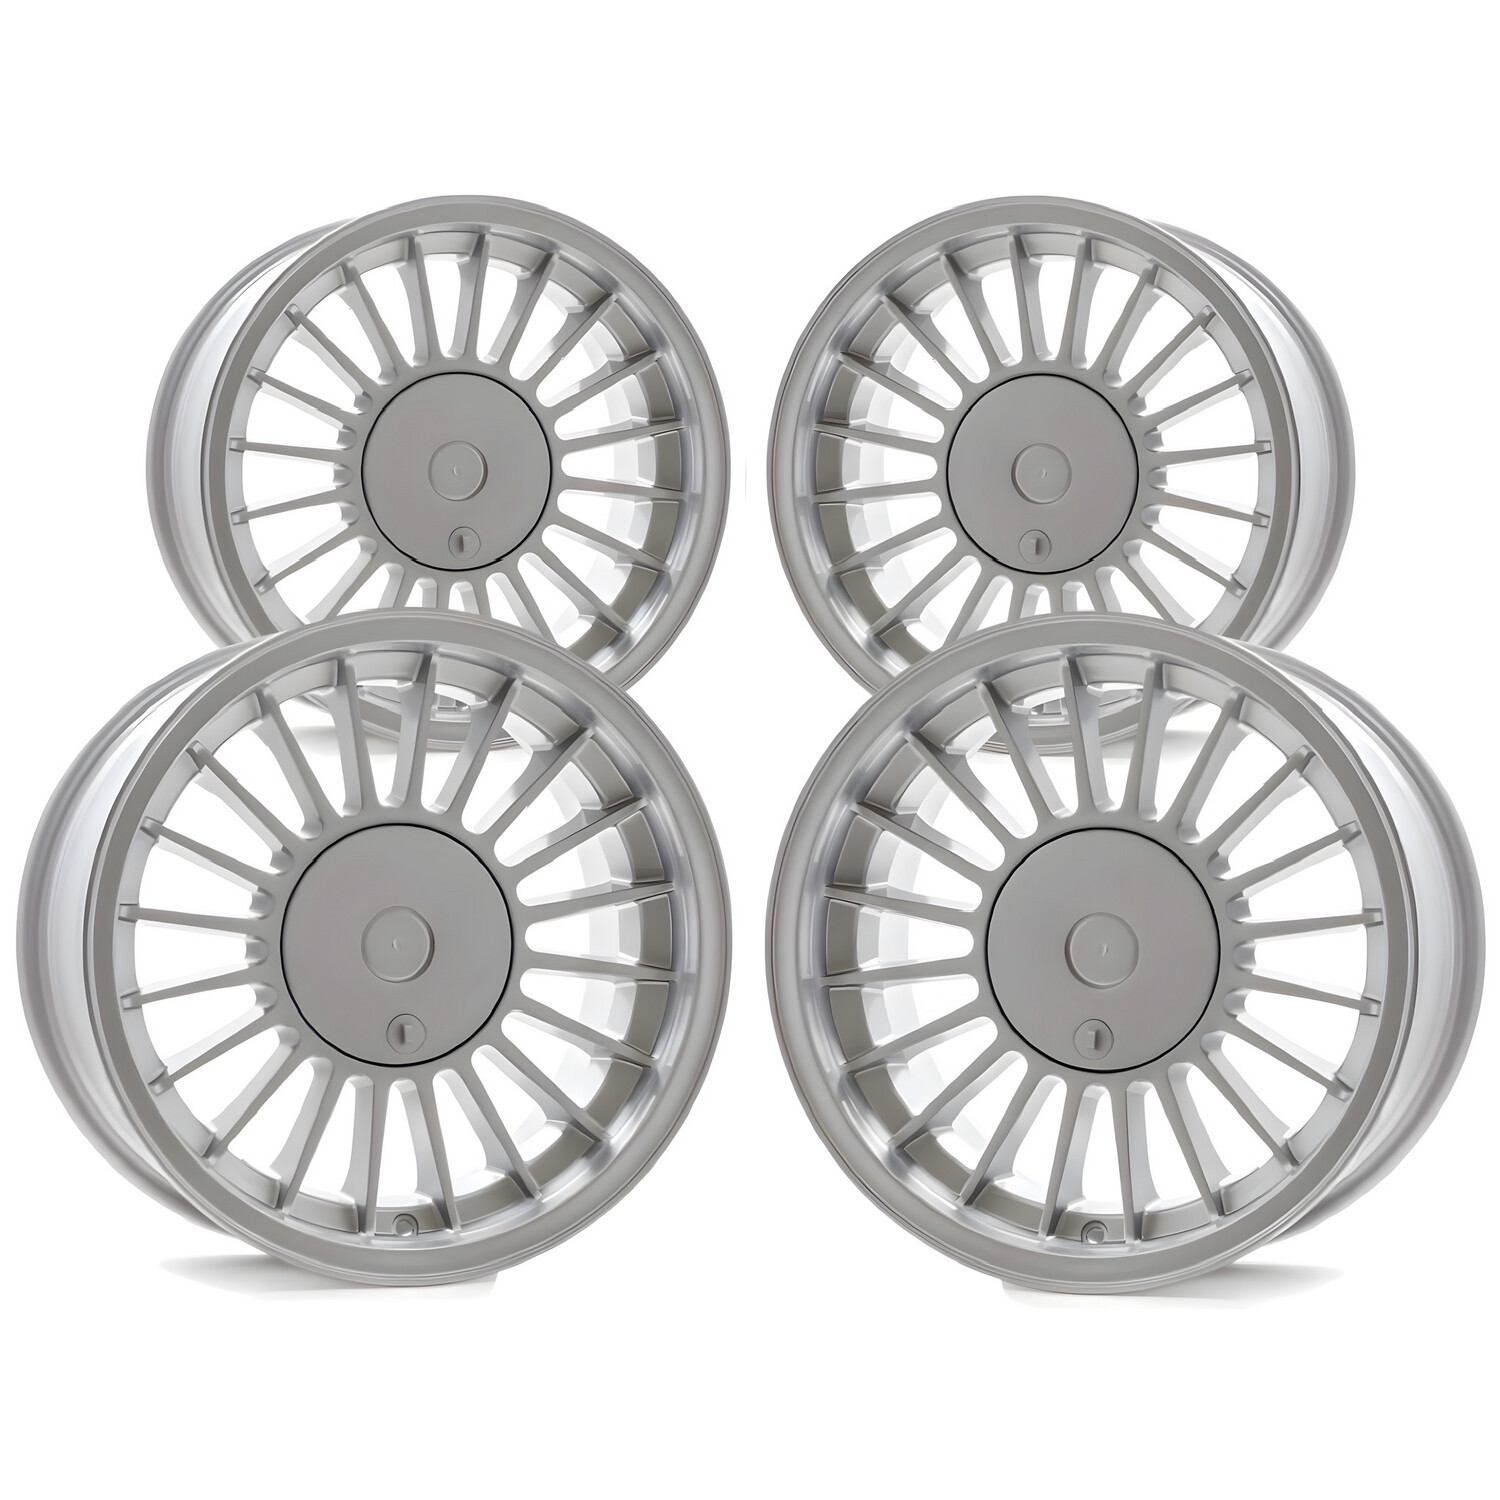 15" Maxilite Alpina Classic Softline Style Wheels (4x100 15x6 ET12)